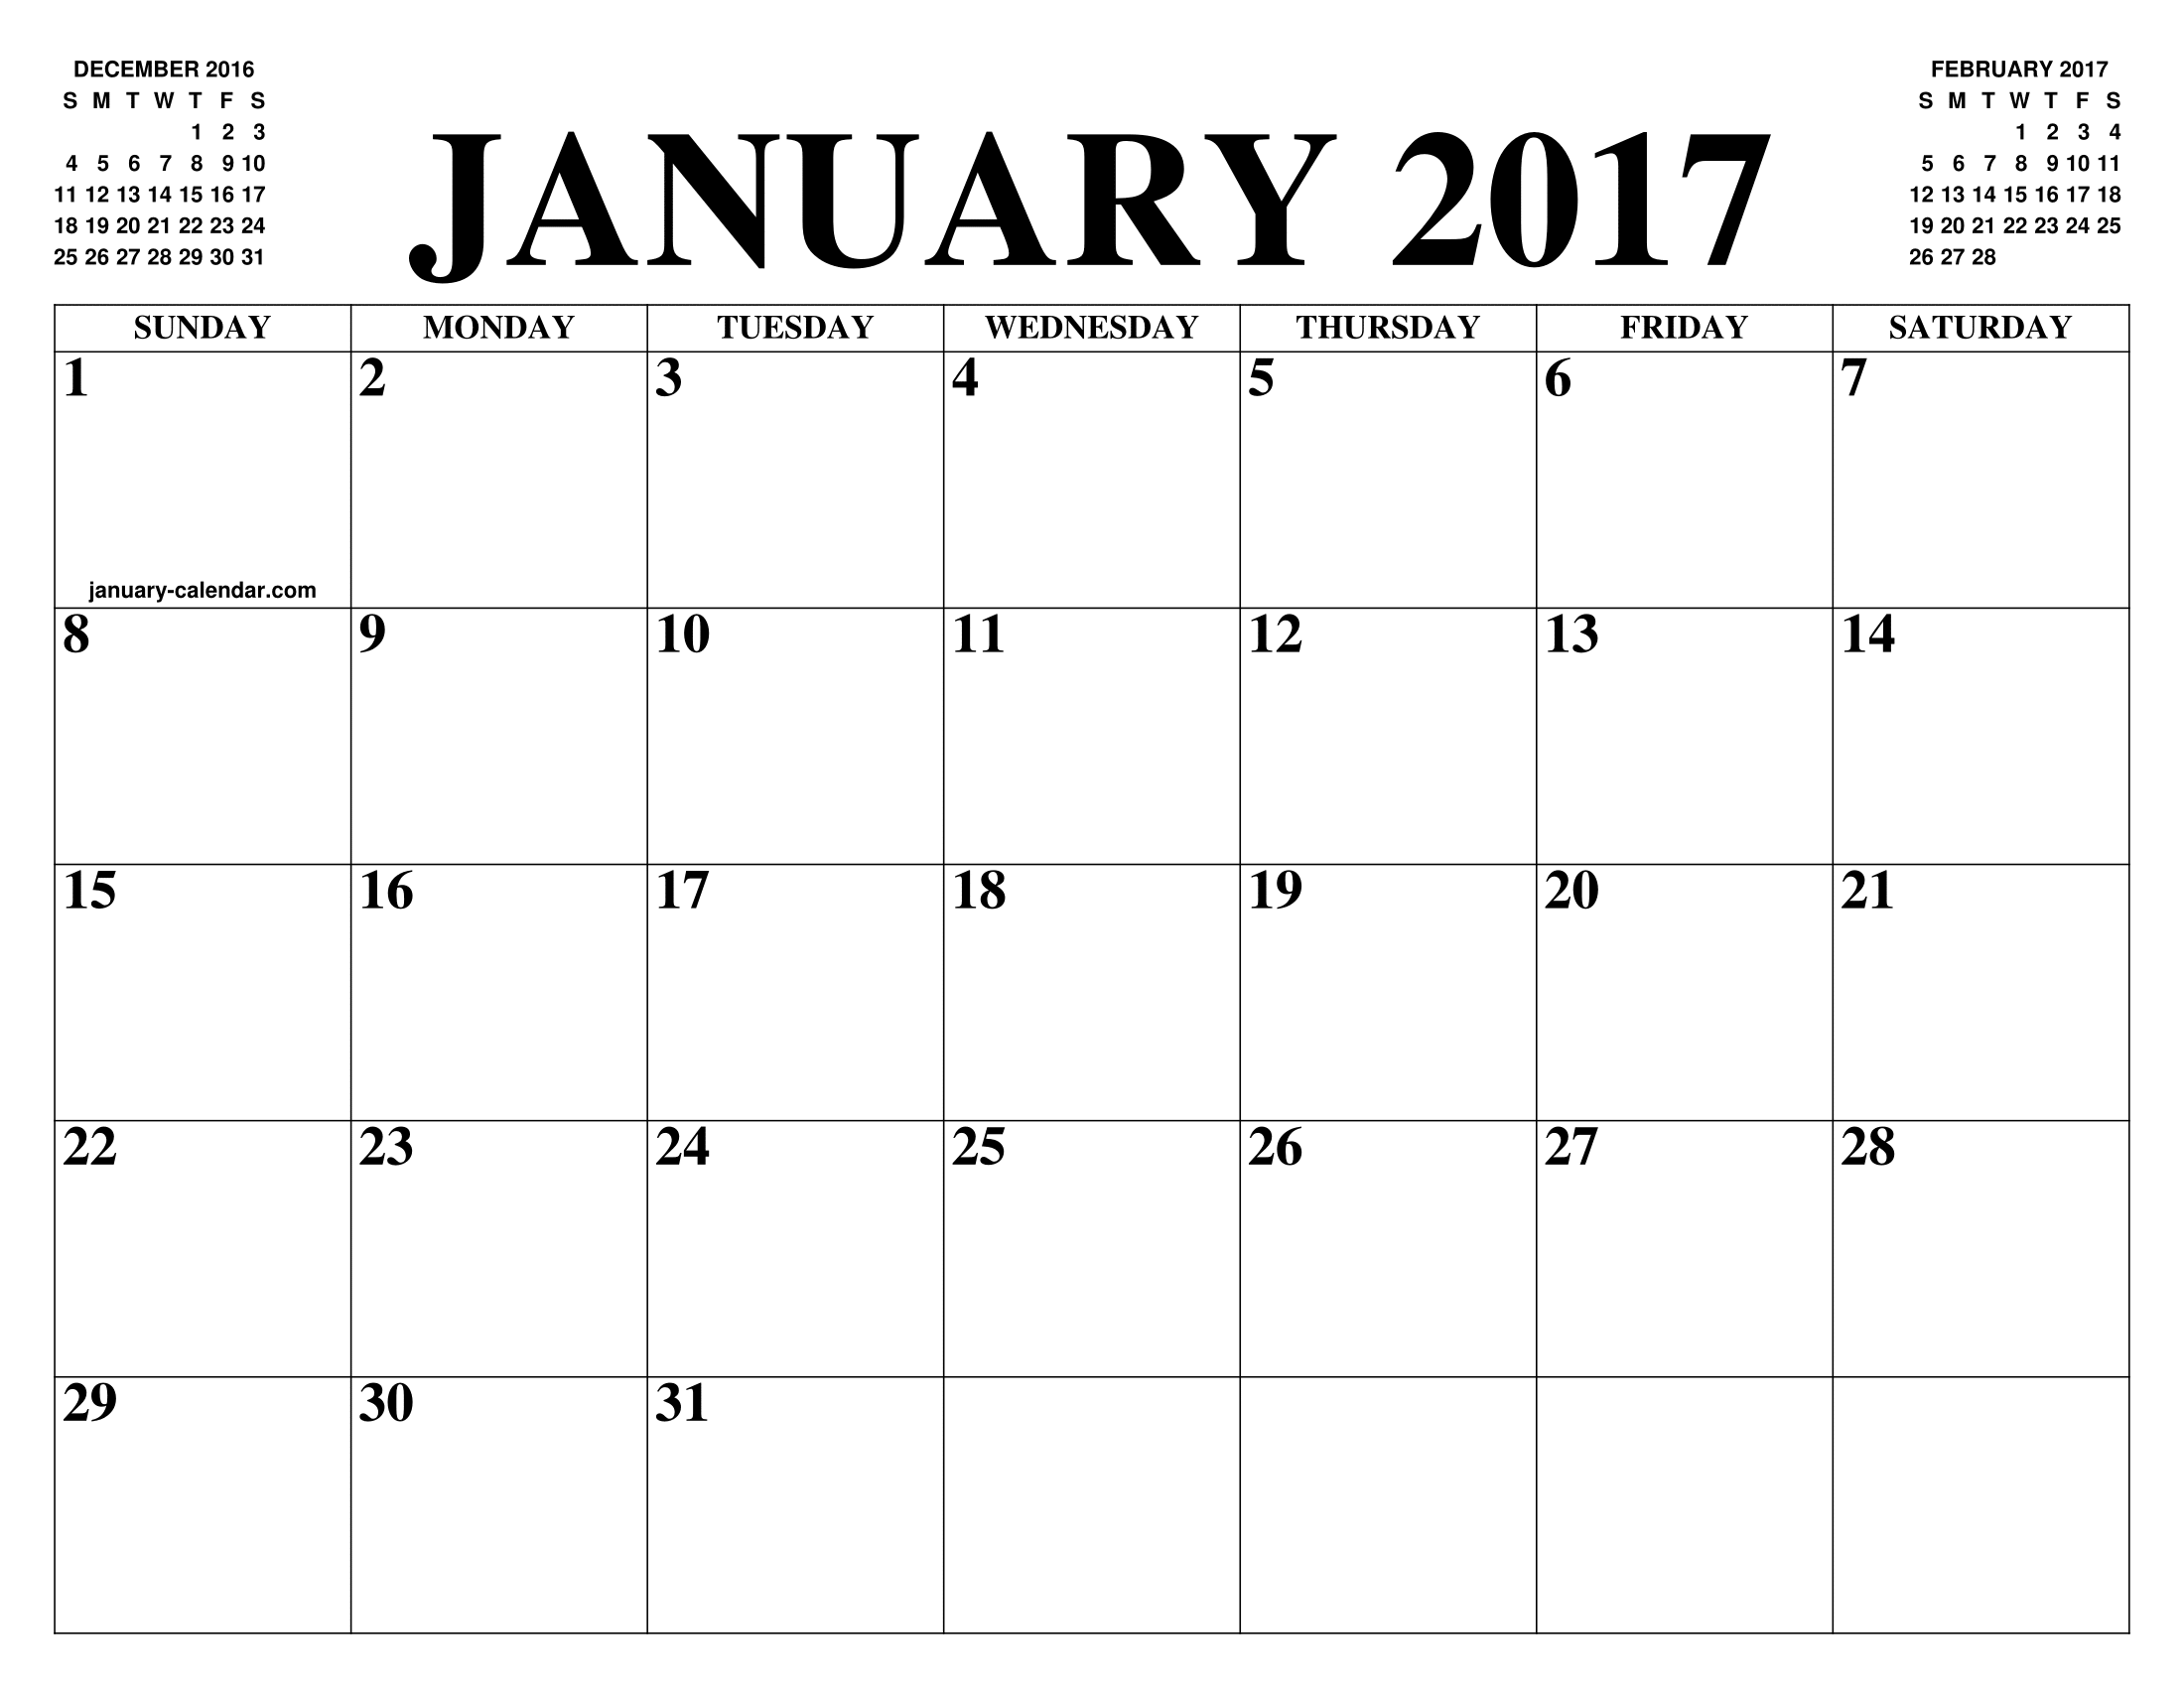 JANUARY 2017 CALENDAR OF THE MONTH FREE PRINTABLE JANUARY CALENDAR OF